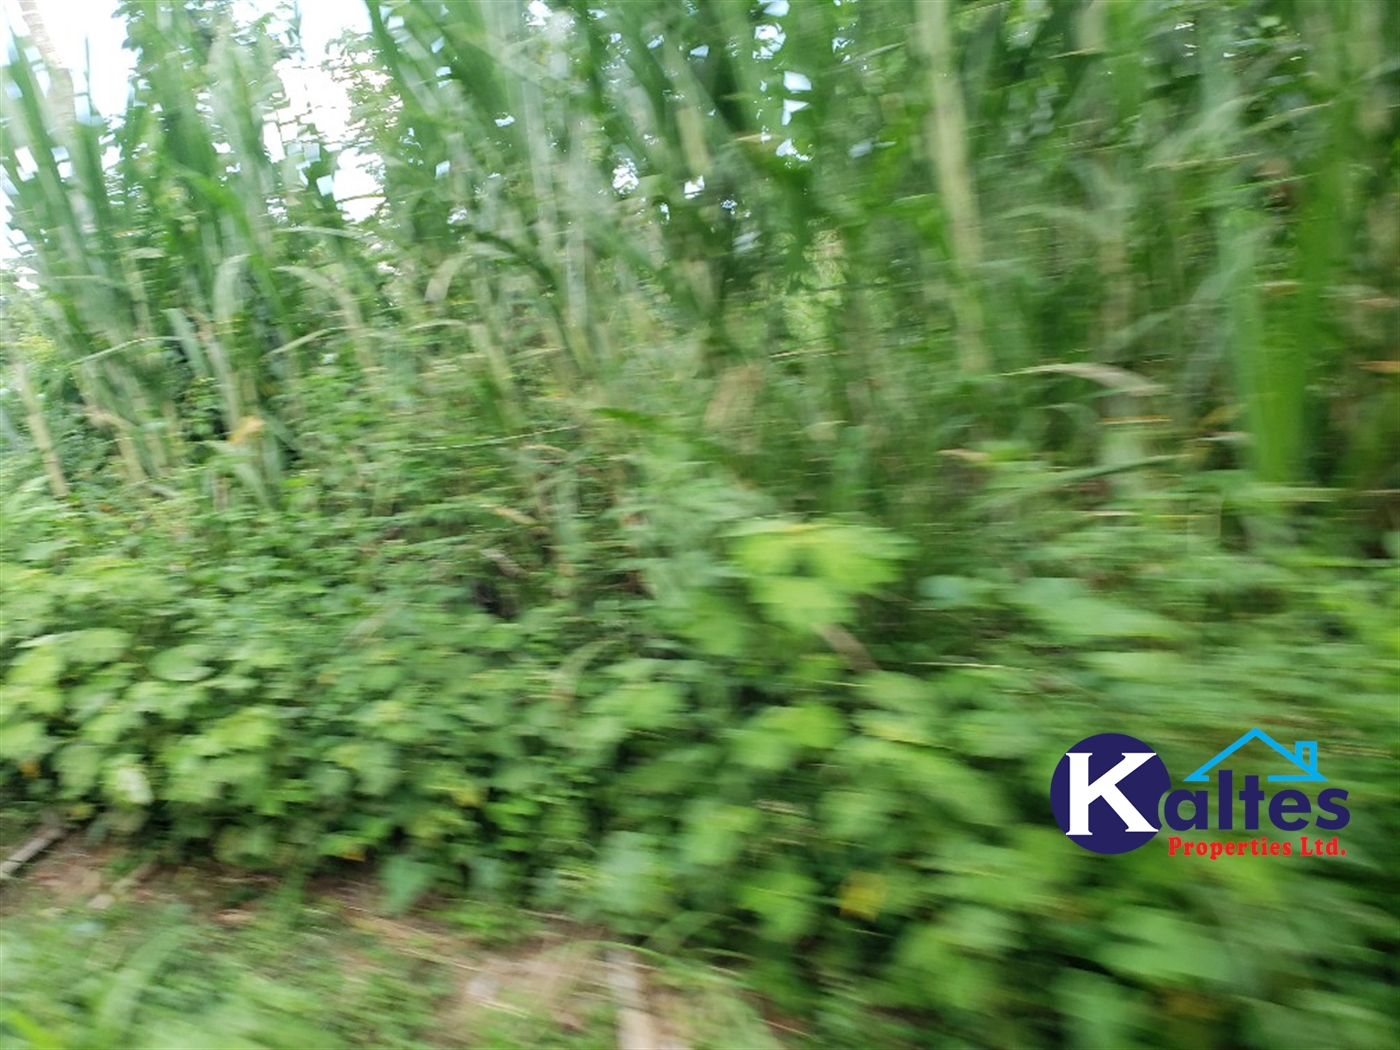 Agricultural Land for sale in Kiringo Buyikwe